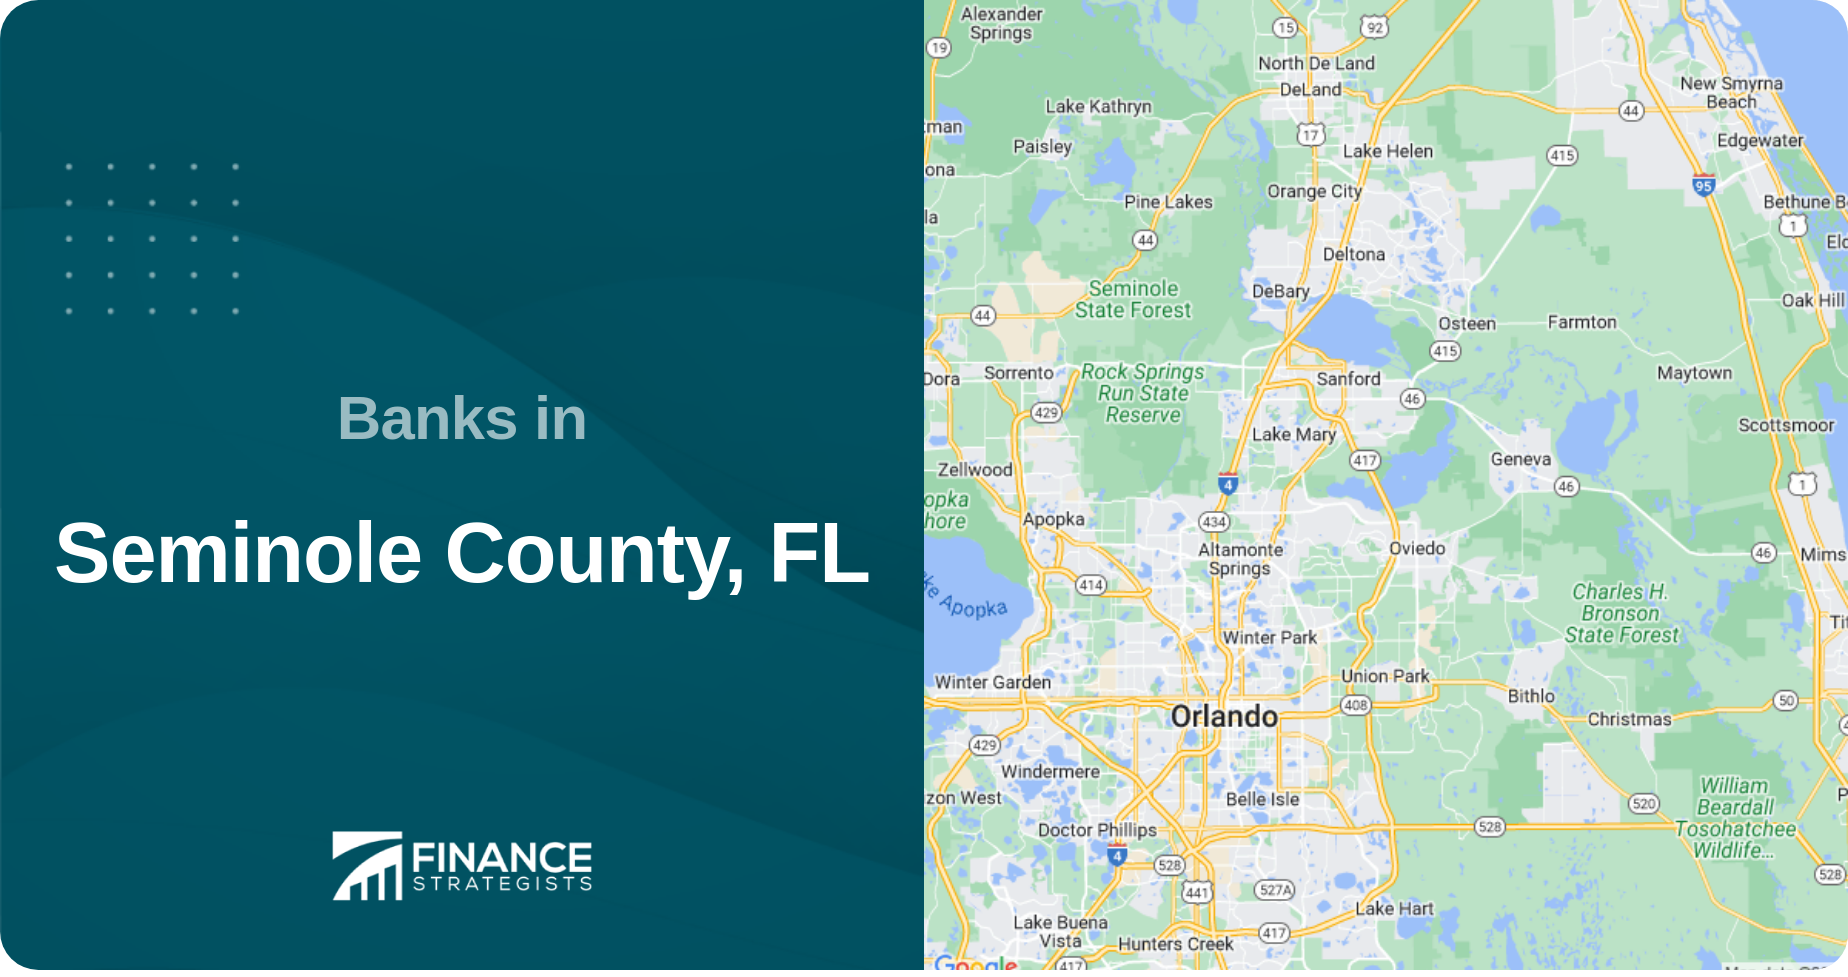 Banks in Seminole County, FL